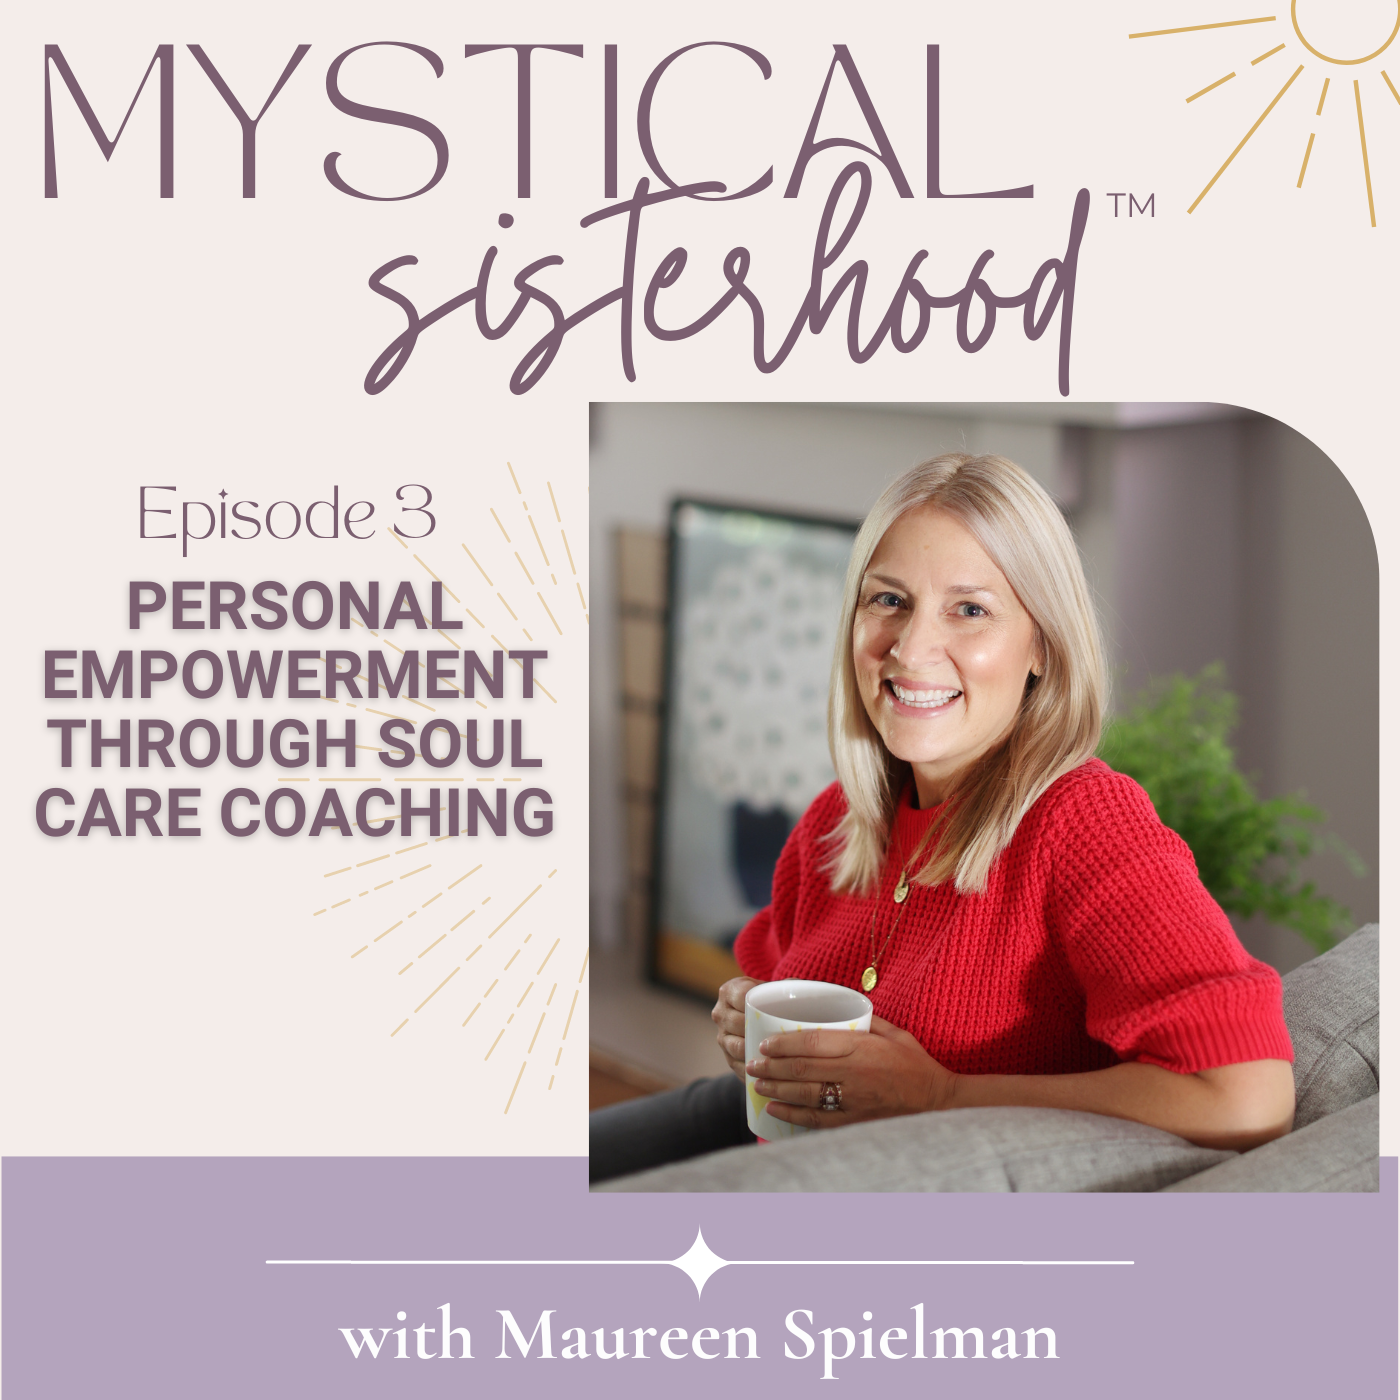 Personal Empowerment Through Soul Care Coaching